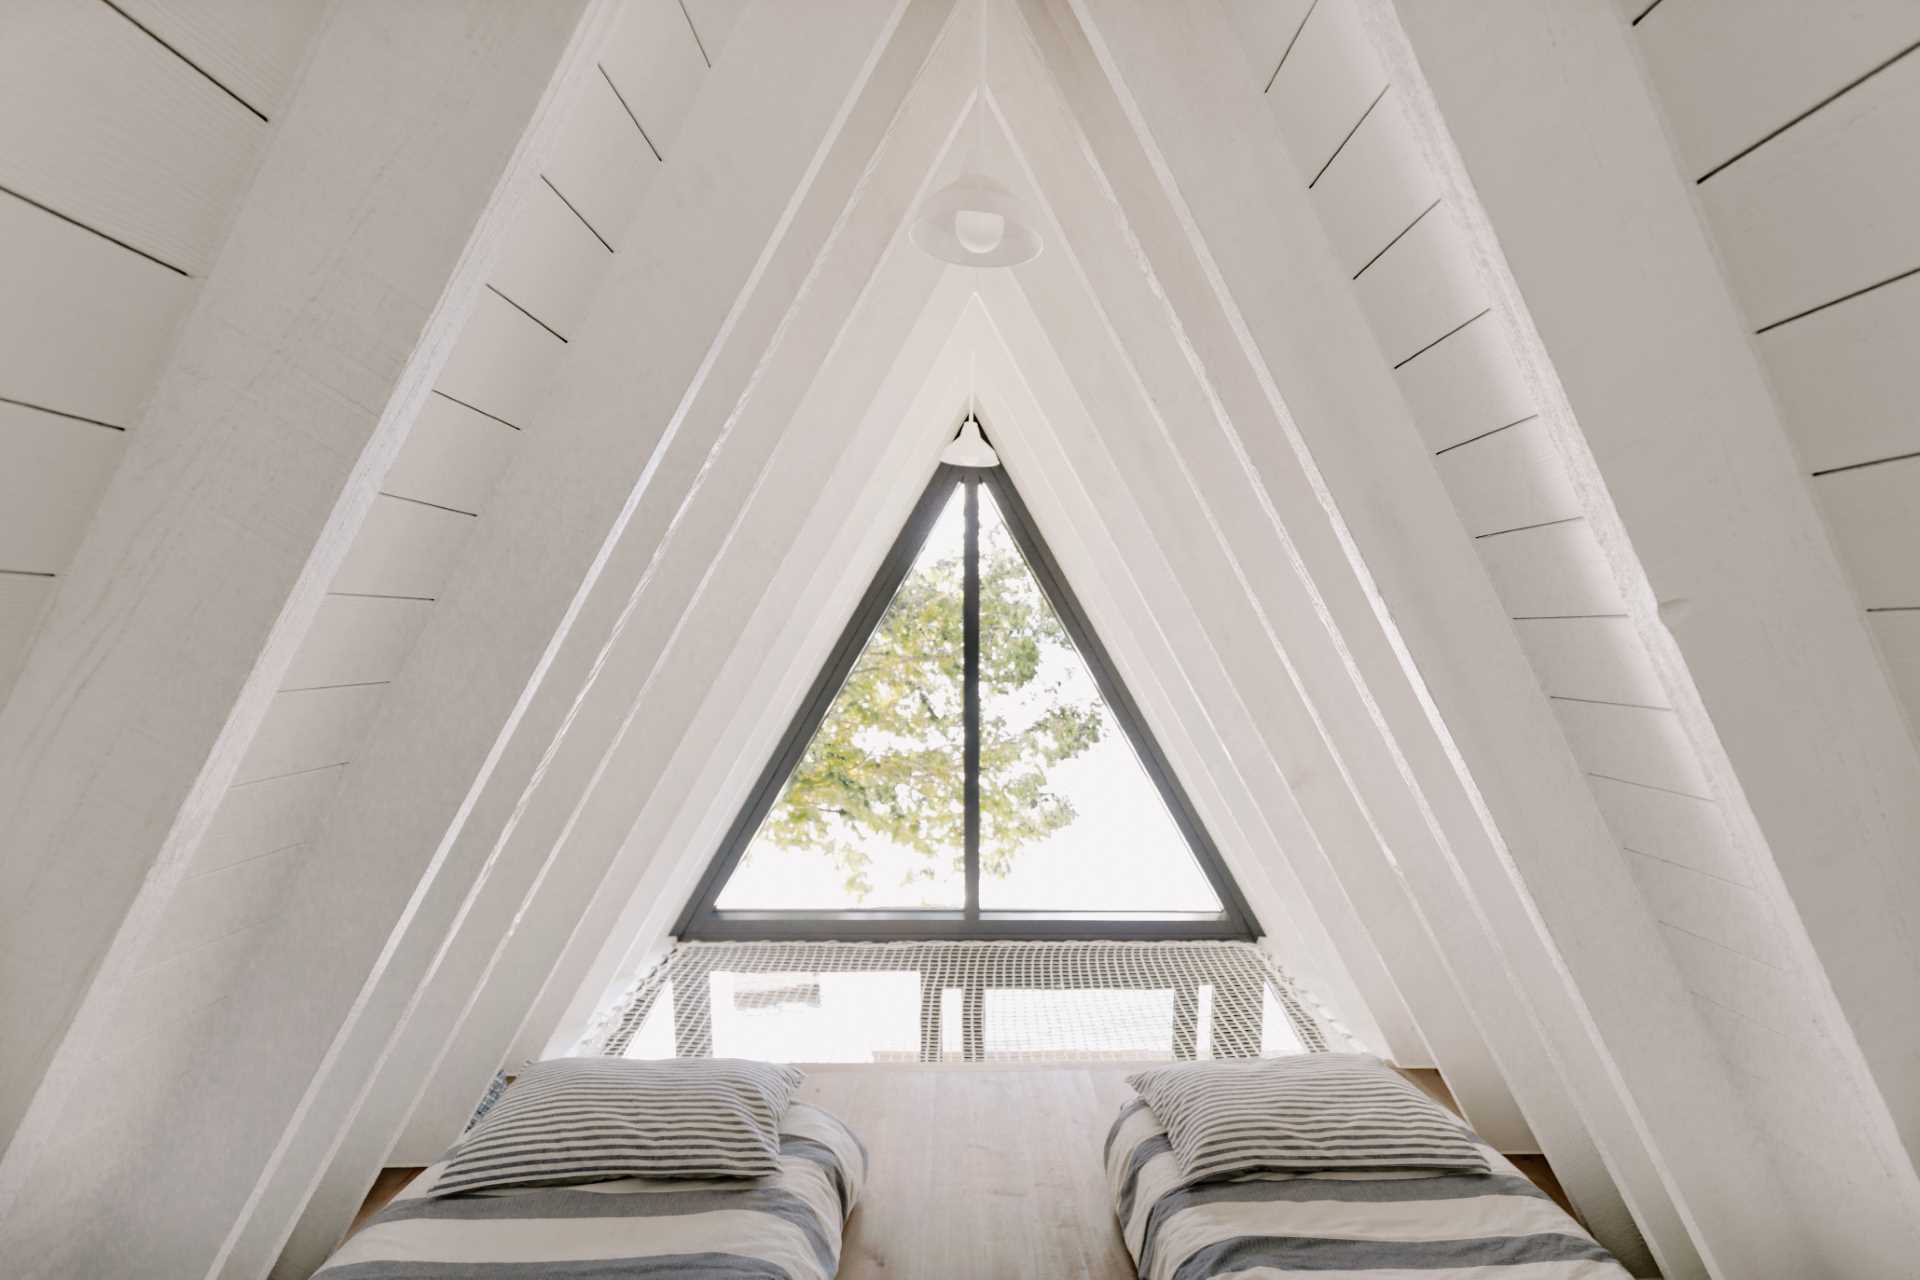 Loft bedroom inside an A-frame cabin.